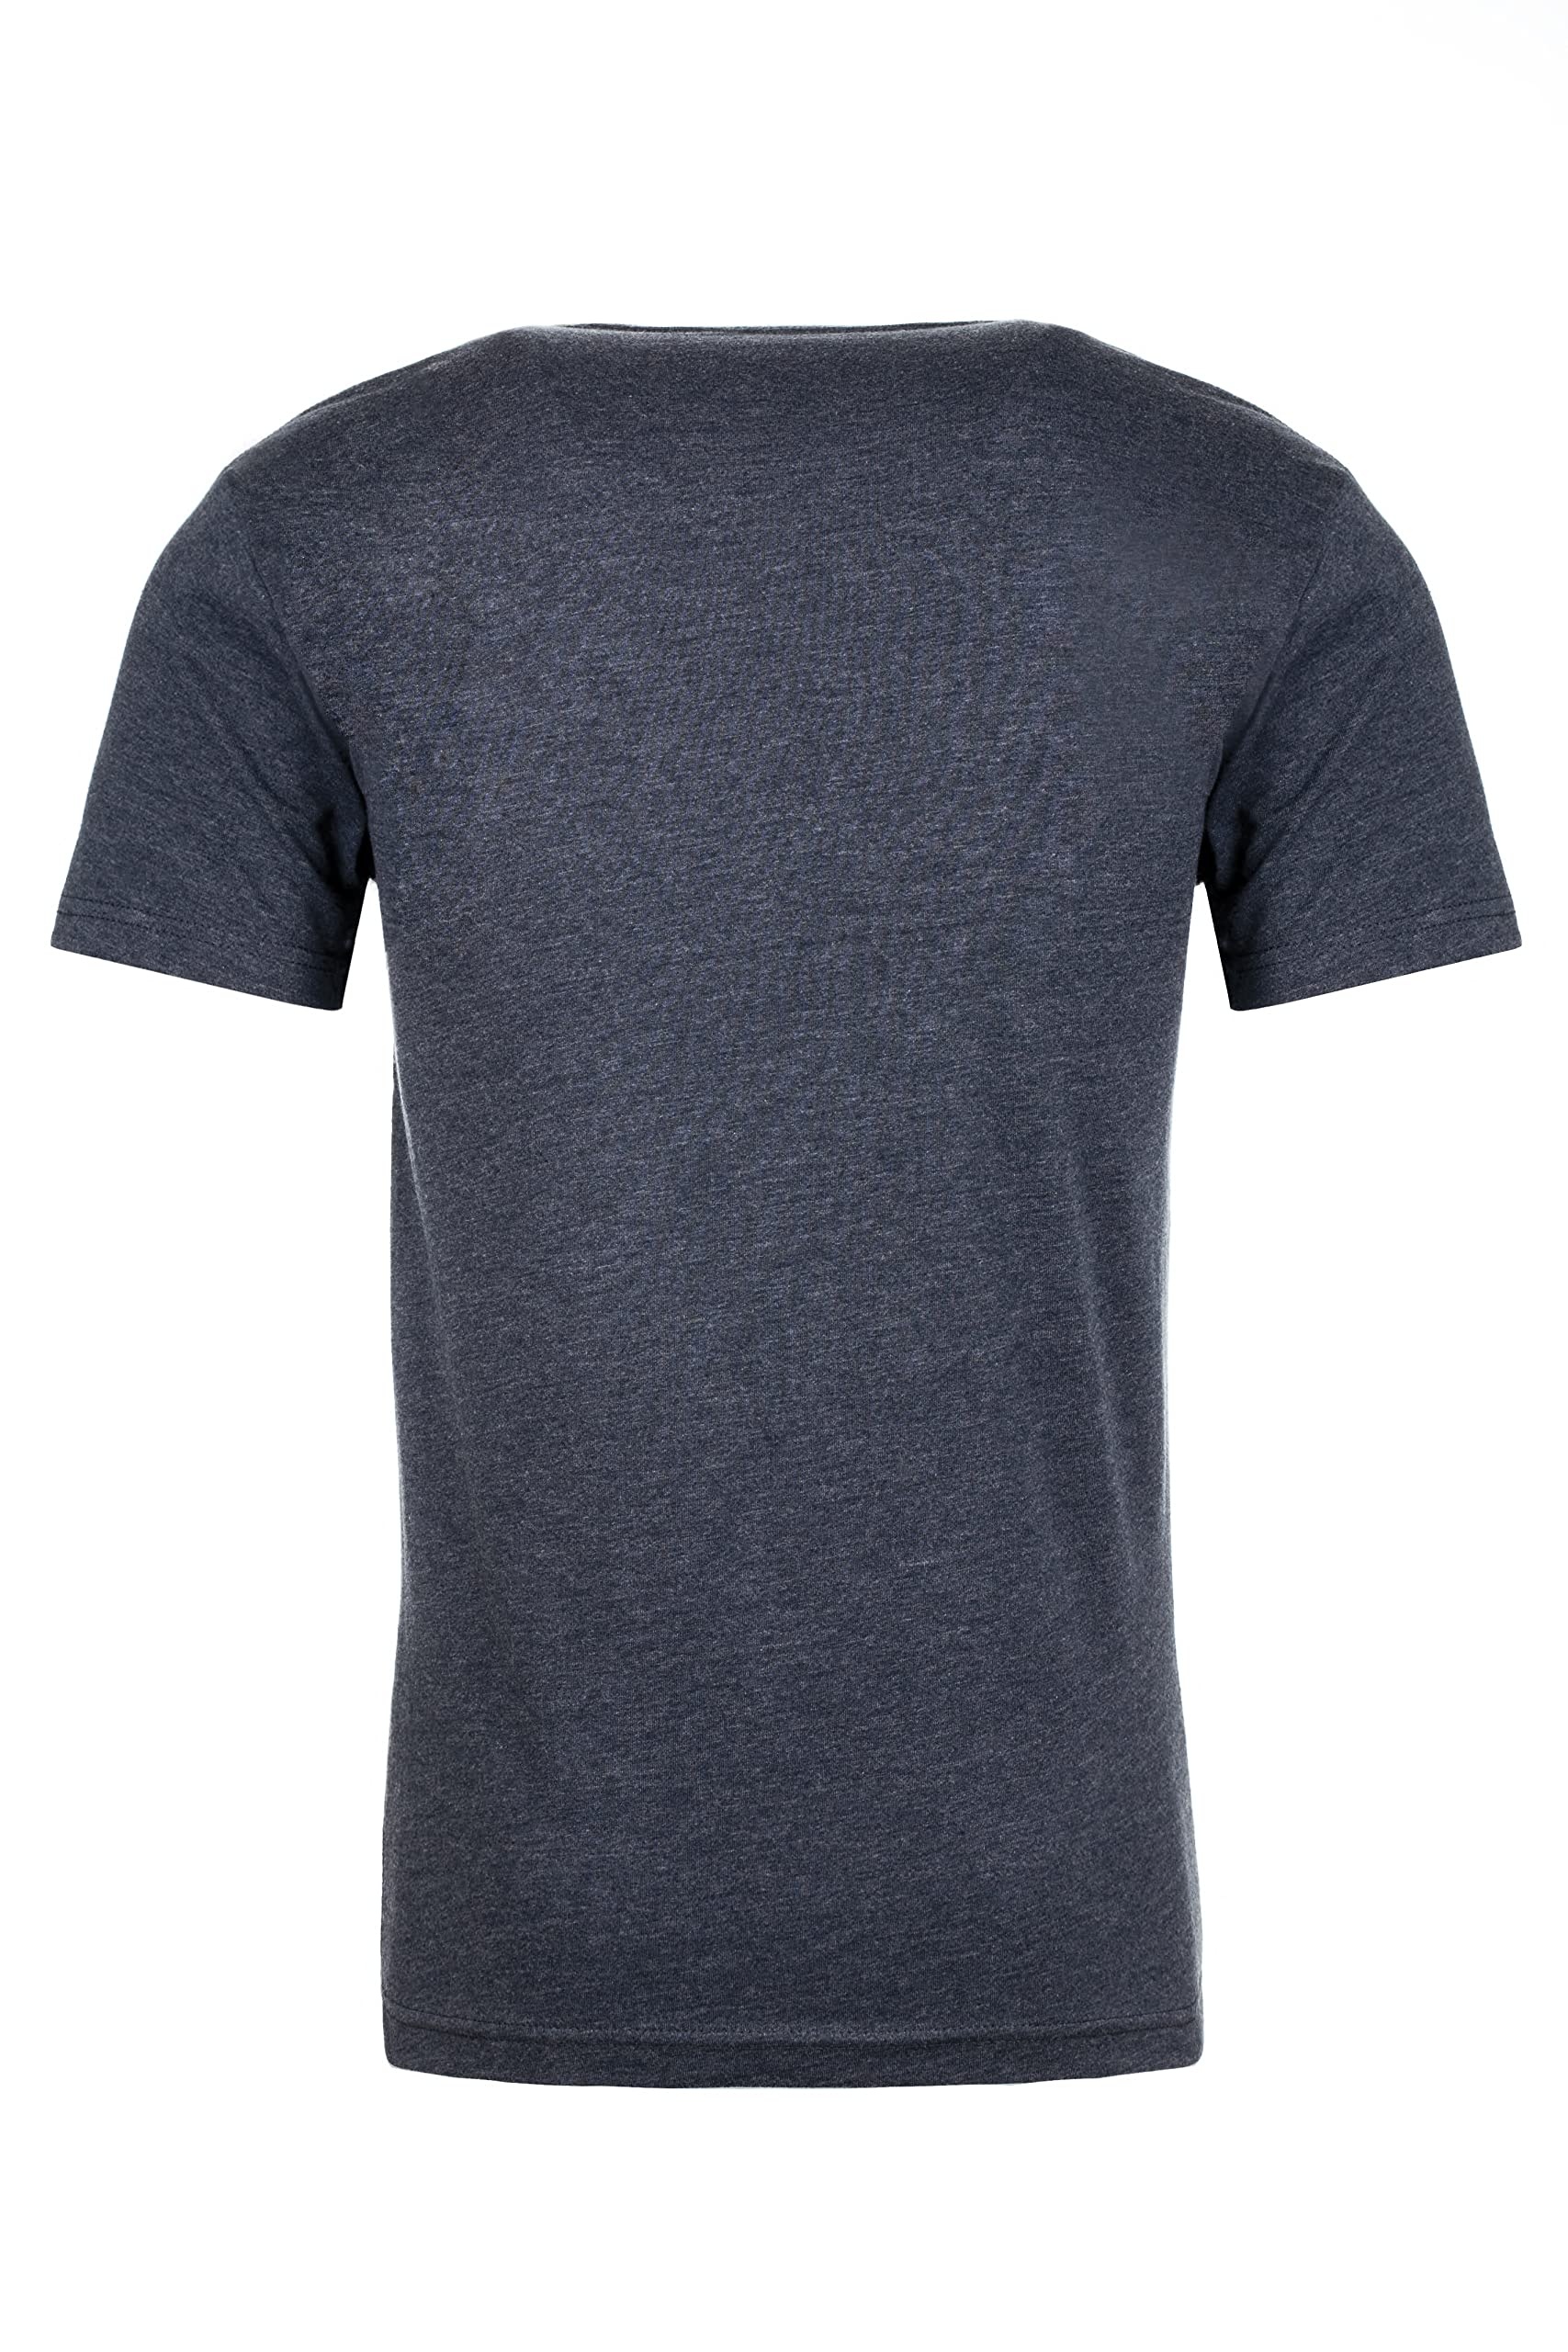 Next Level Apparel Men's Premium Fitted CVC T-Shirt (6210), Midnight Navy, Large